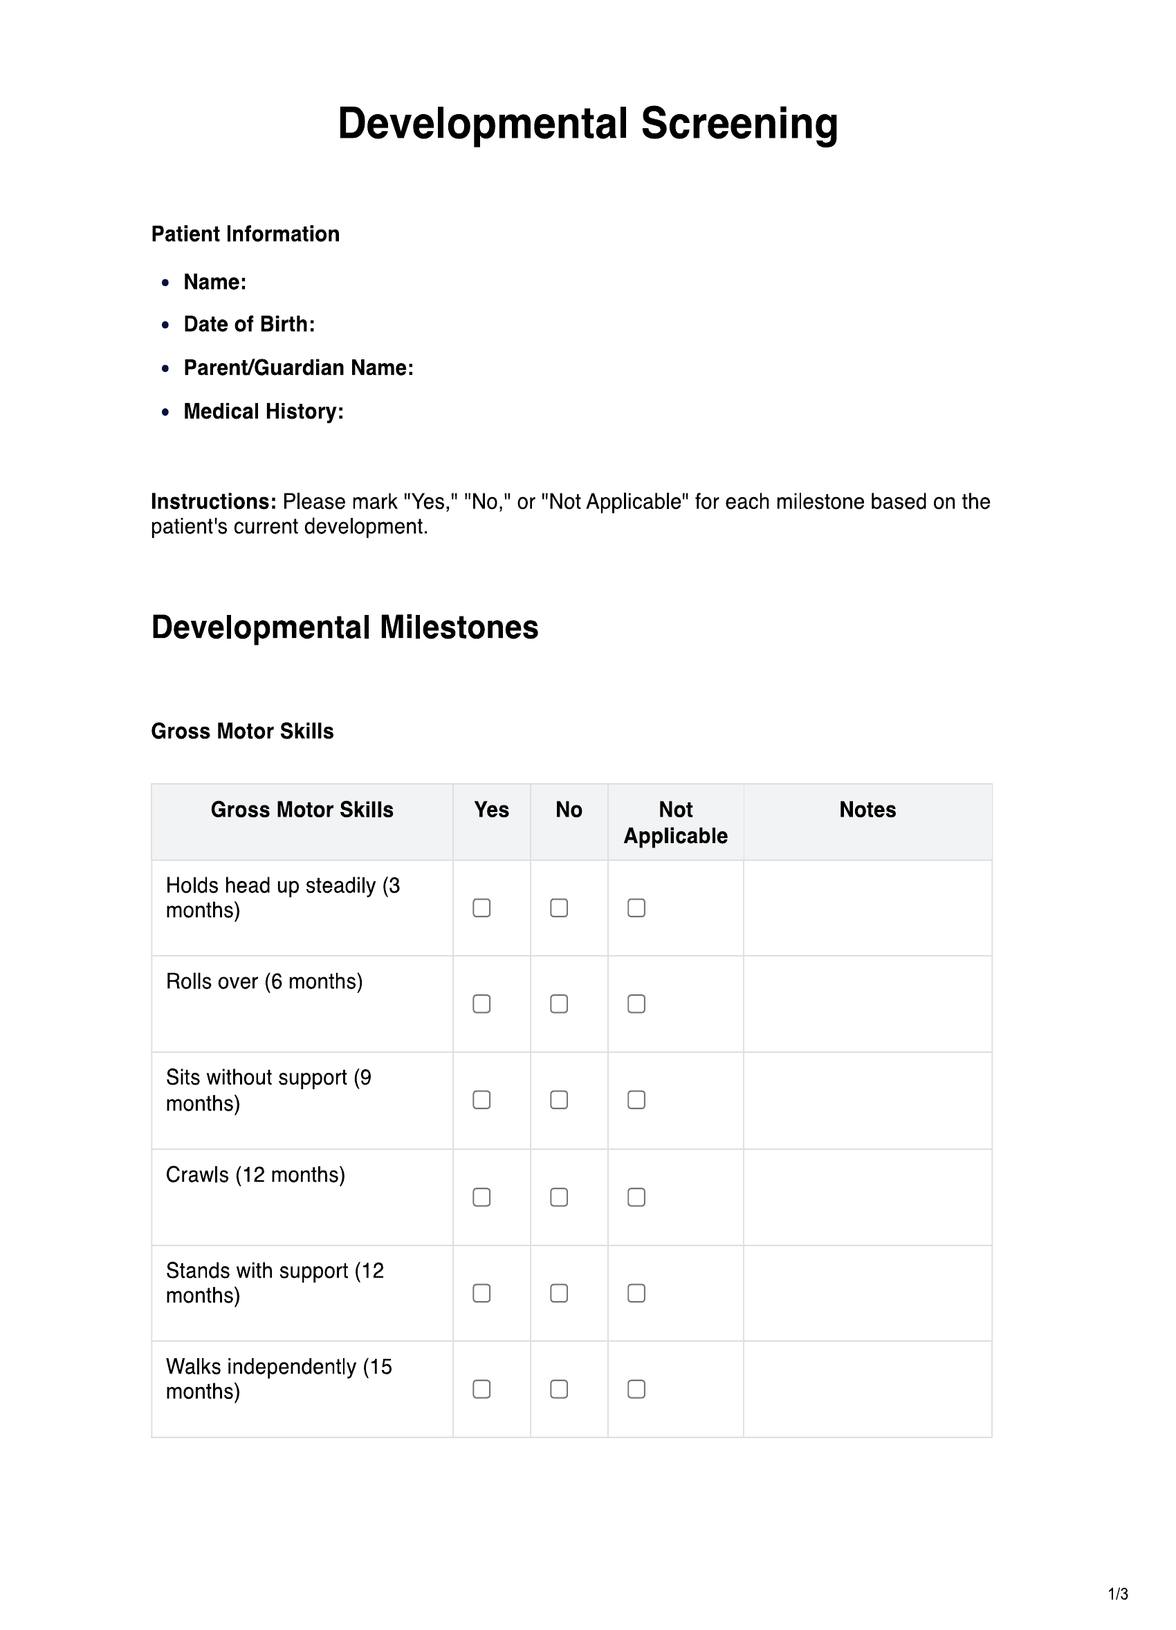 Developmental Screening Tool PDF Example